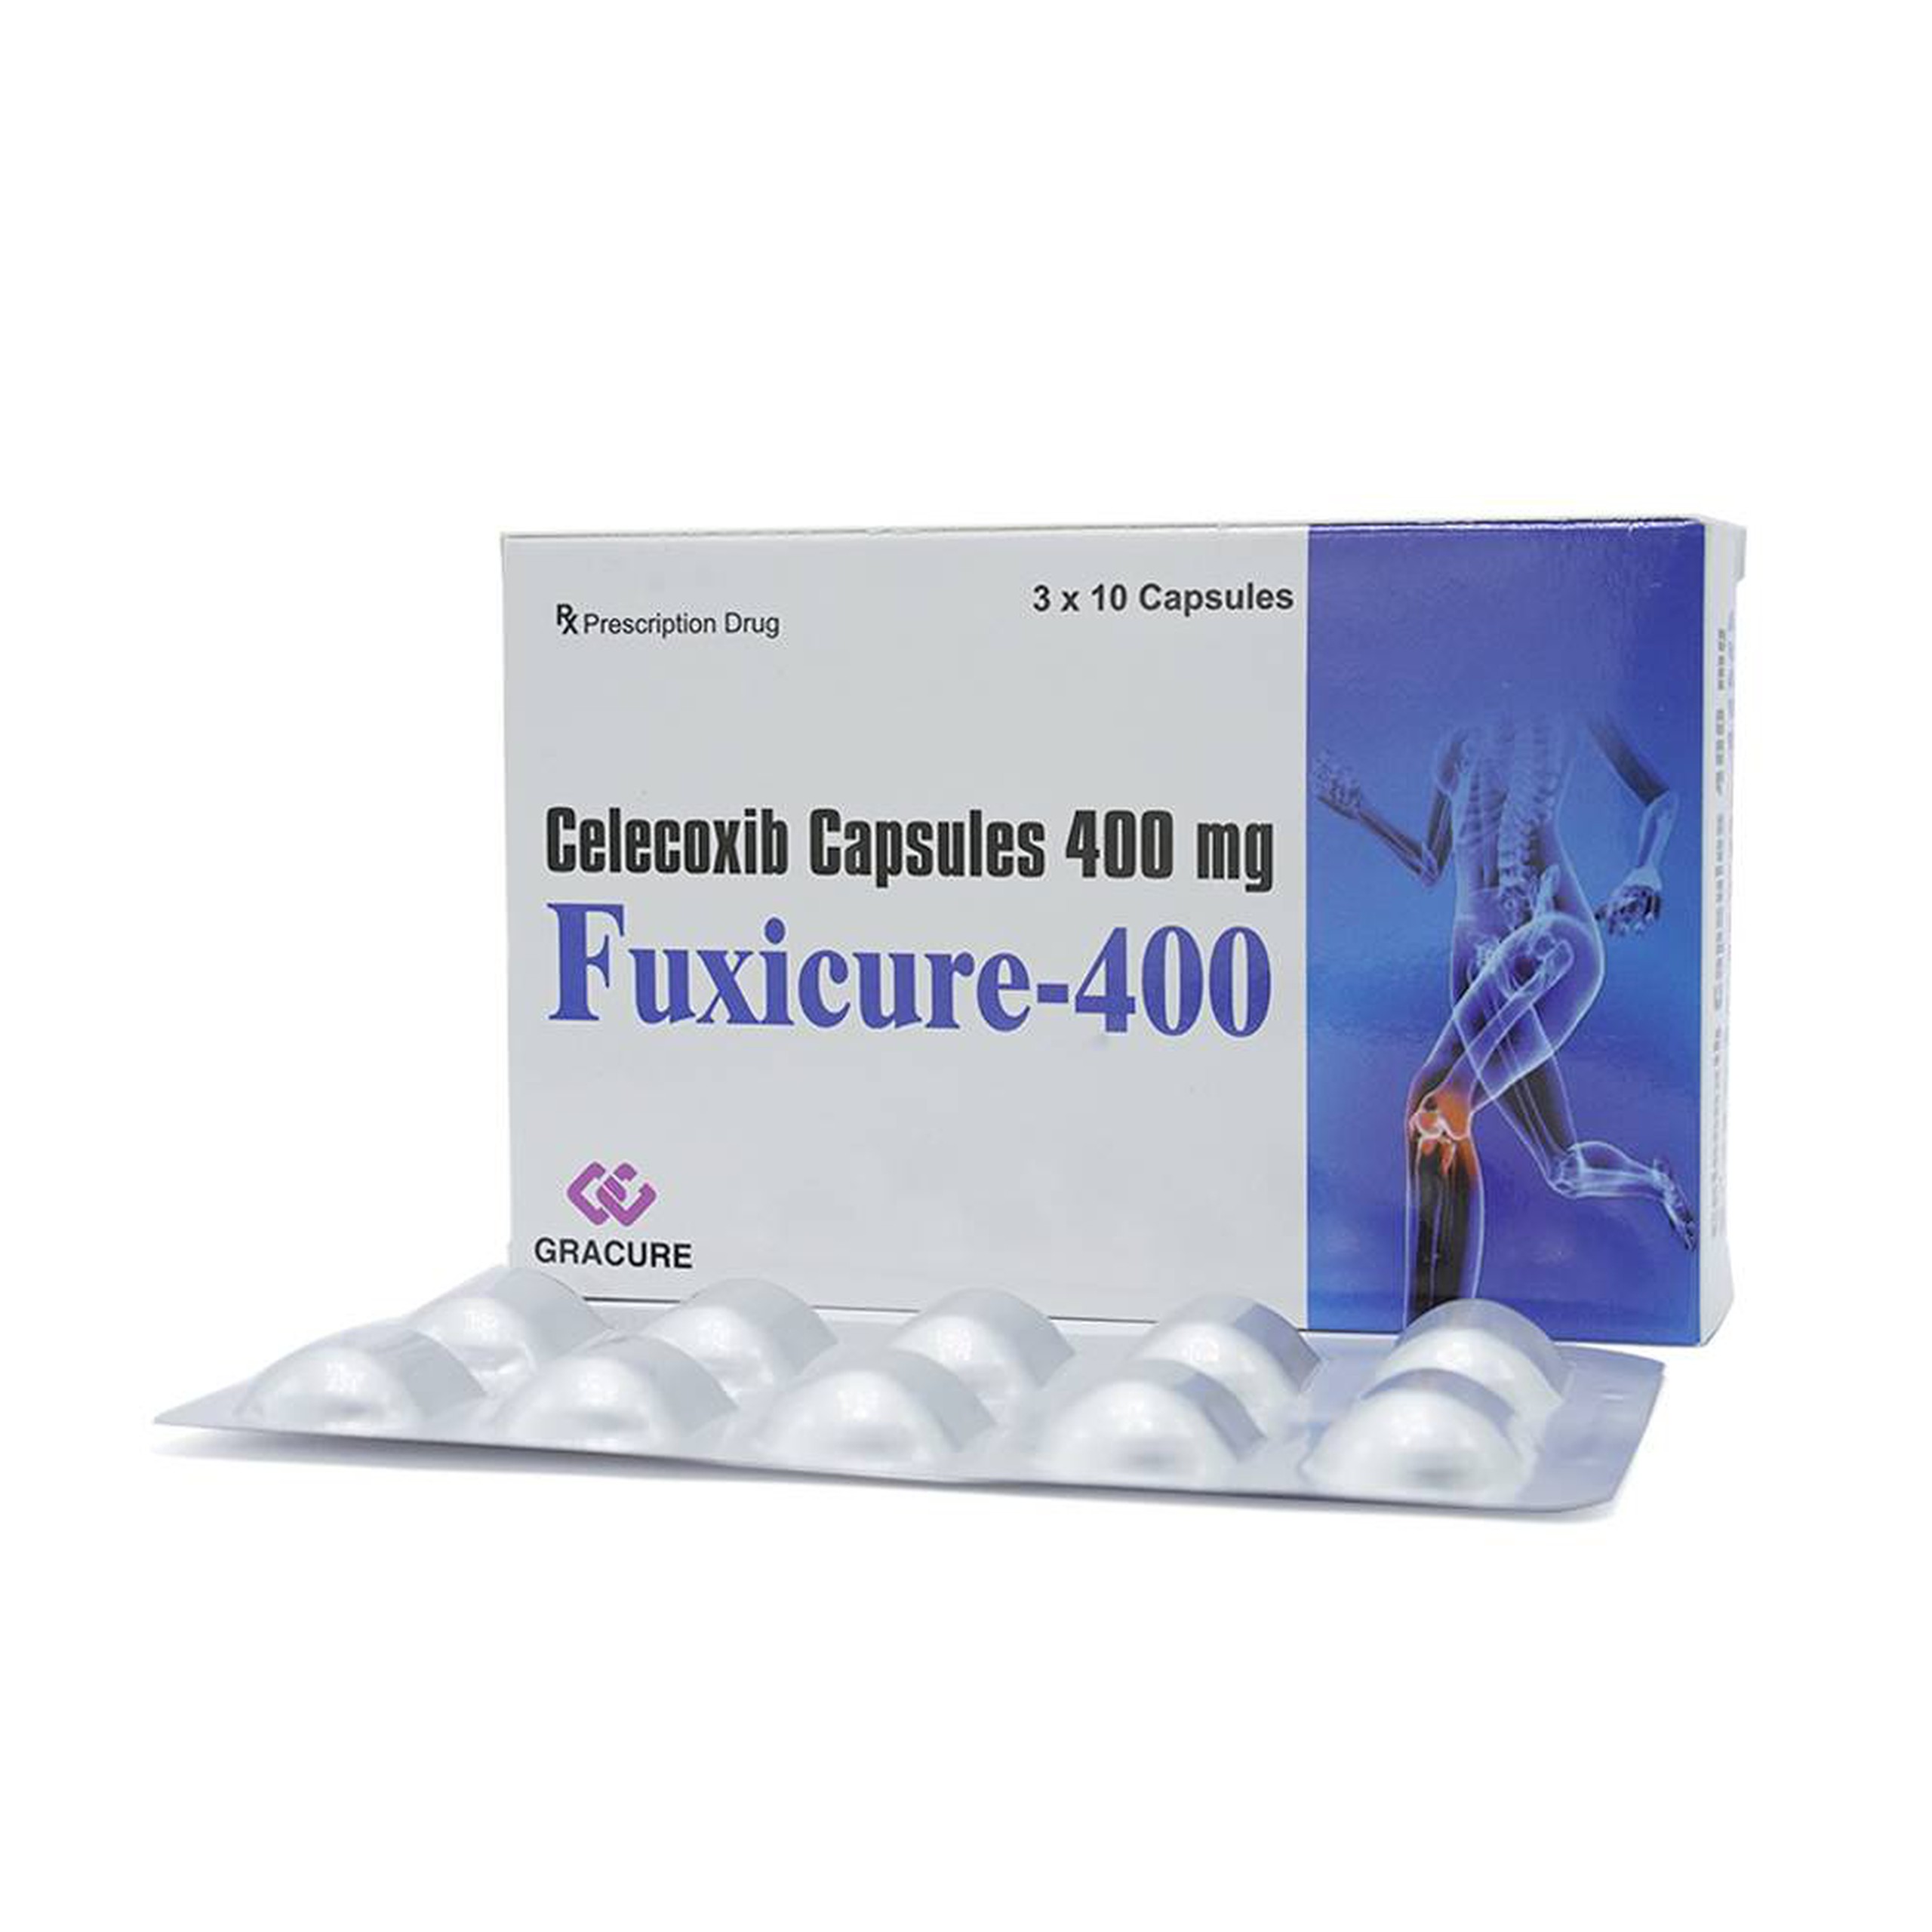 Thuốc Fuxicure-400 Gracure điều trị thoái hóa khớp (3 vỉ x 10 viên)